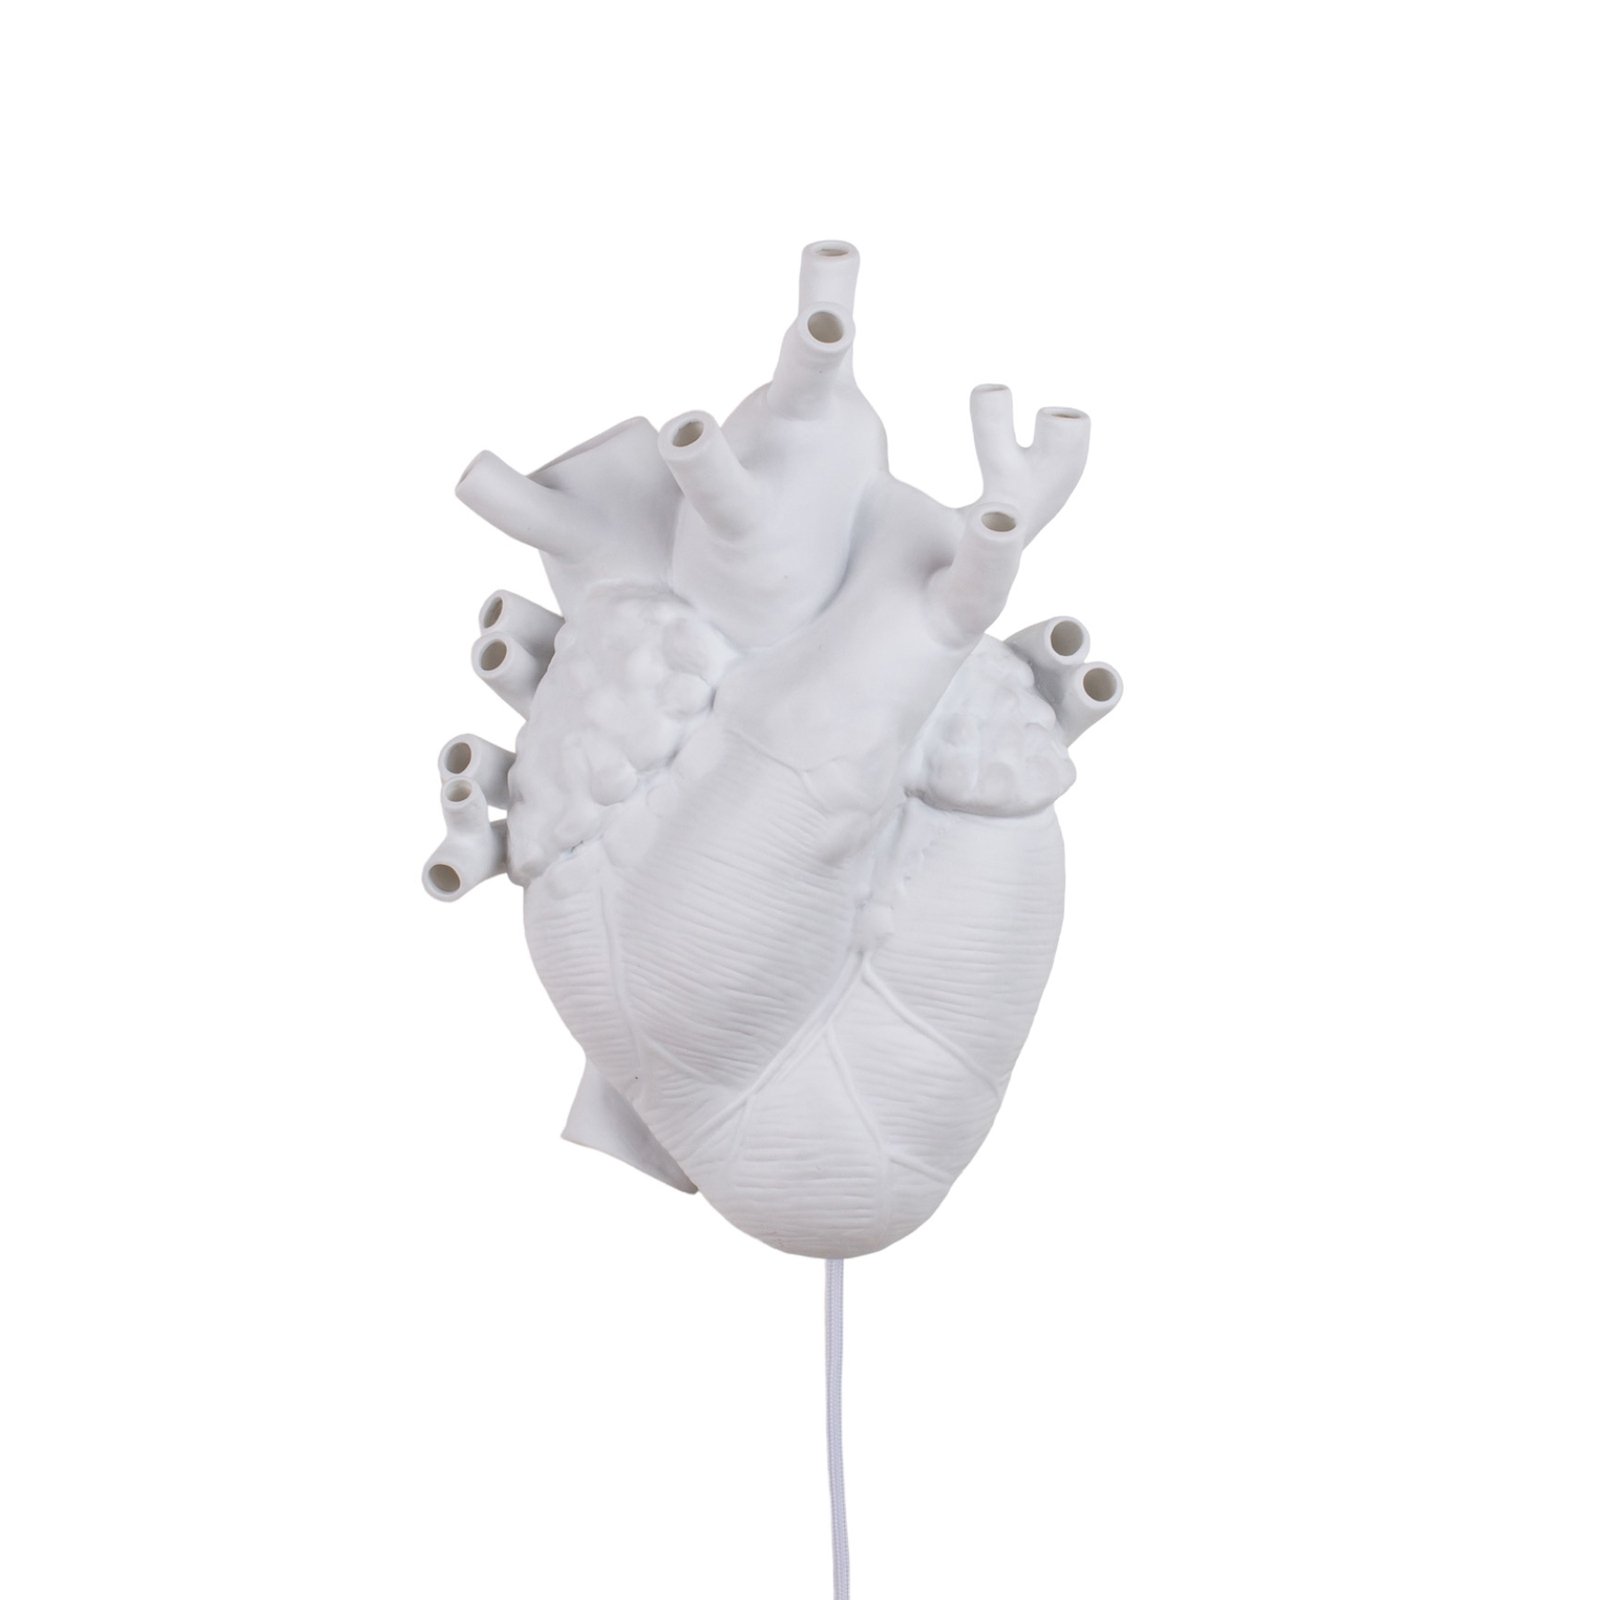 LED-vägglampa Heart Lamp av porslin, vit